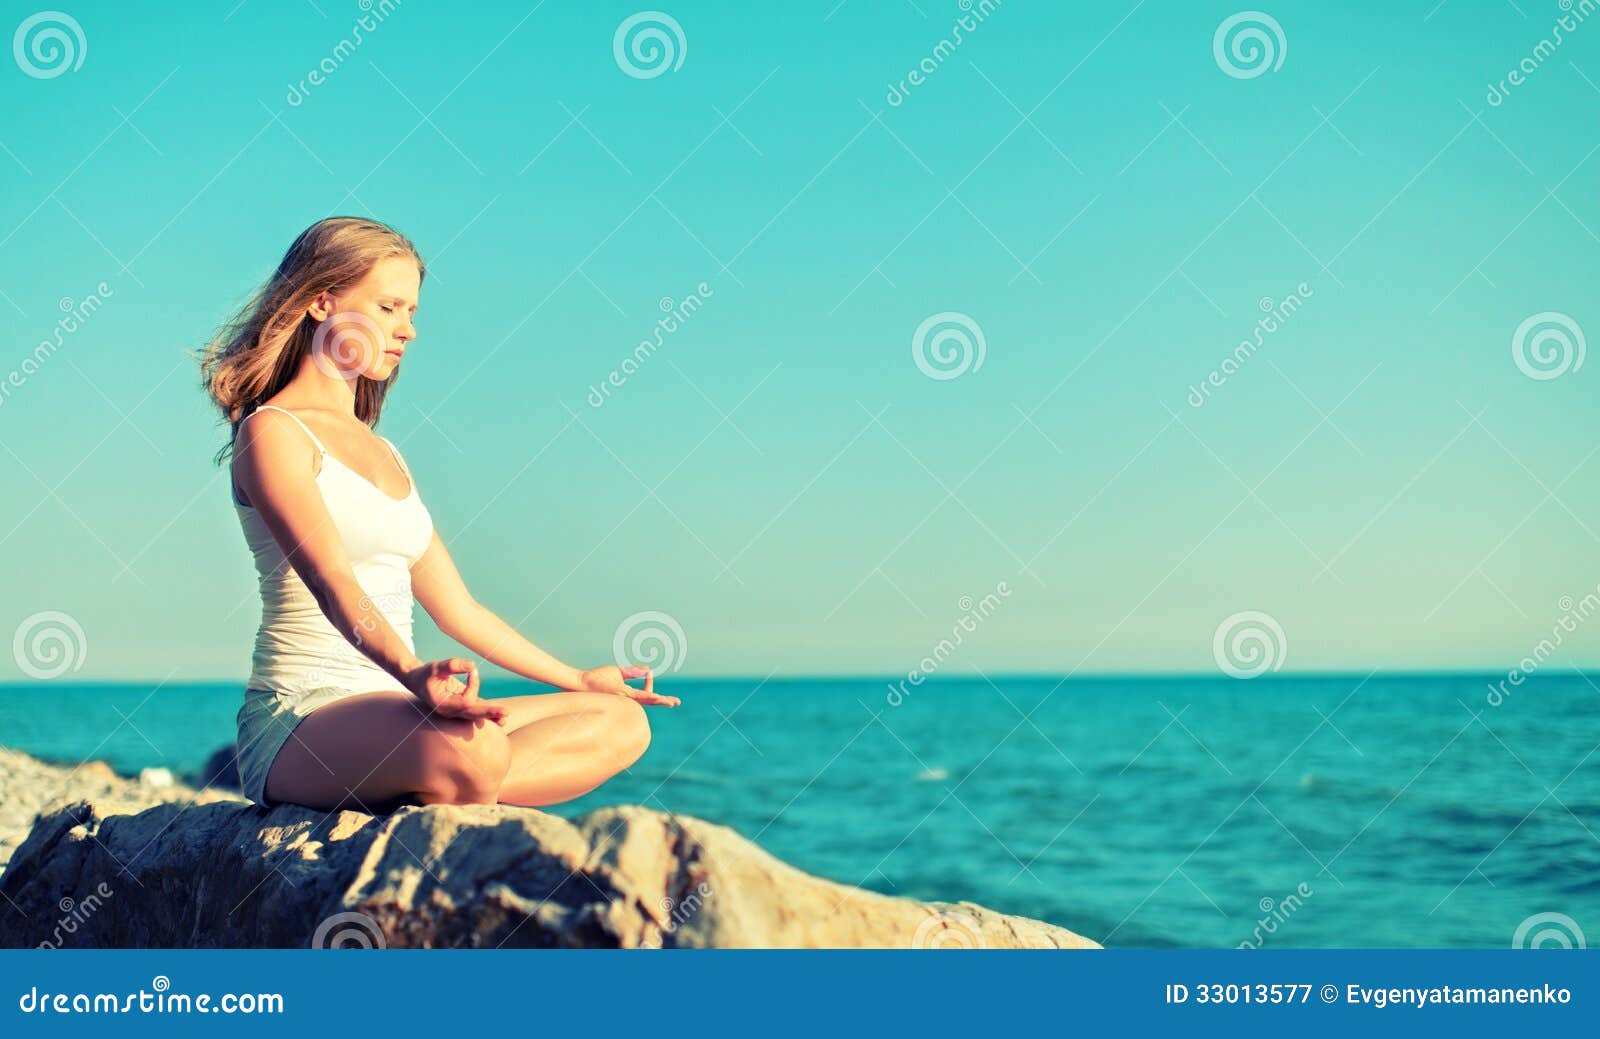 woman meditating in lotus yoga on beach